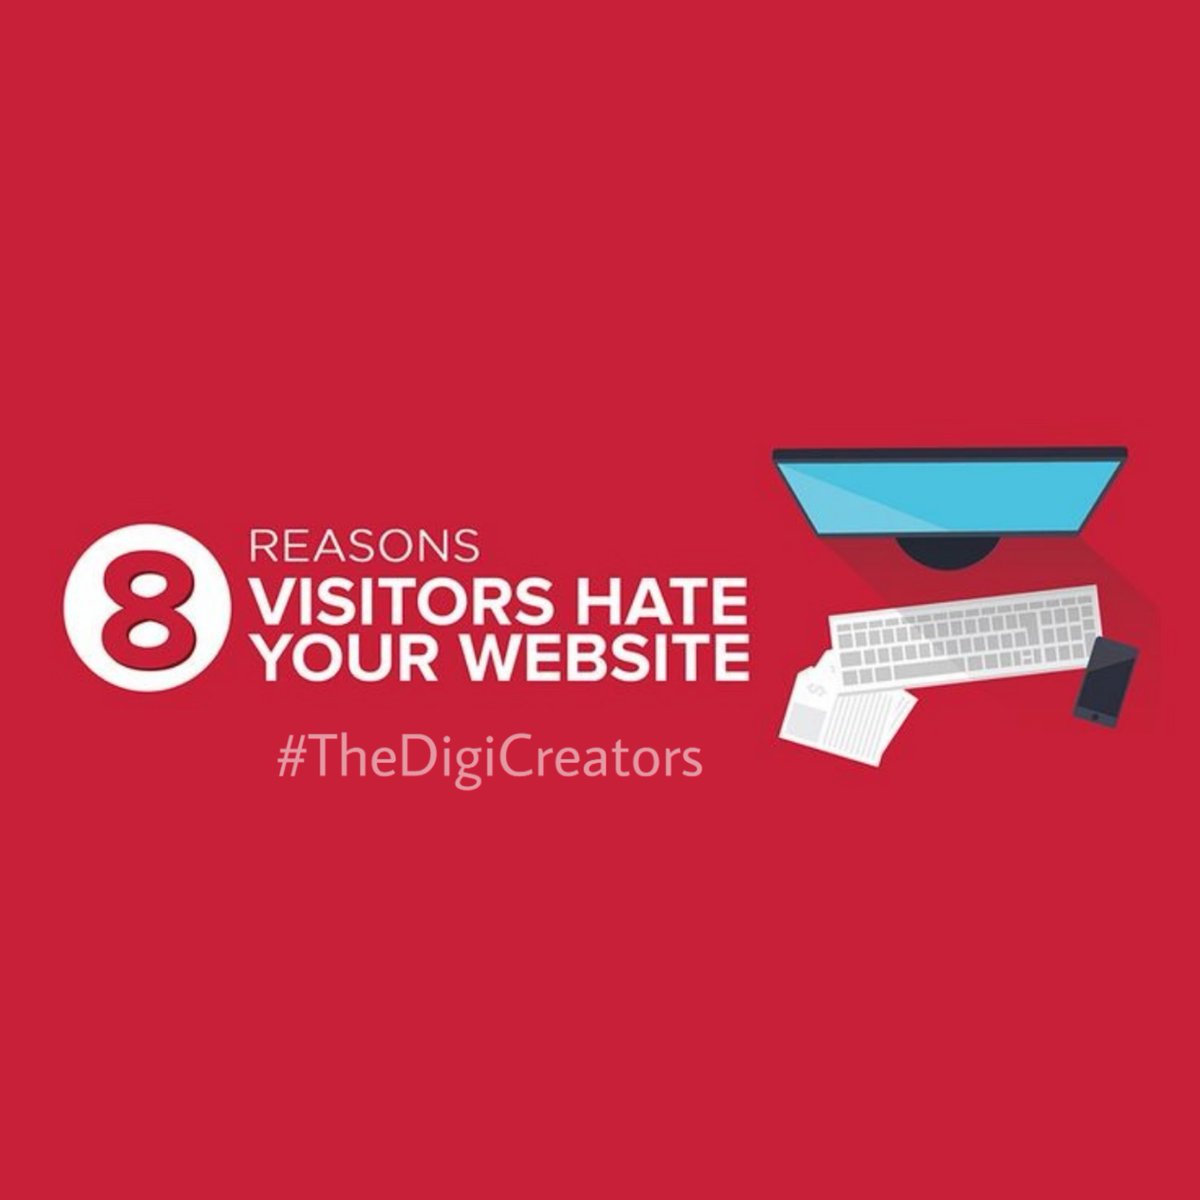 8 Reason visitor's hate your website 🤔 are you facing this challenge? 
instagram.com/p/CANP_hPAE0_/…
#TheDigiCreators 
thedigicreators.com
#cPanelPlugin  #WebsiteLoadingSlow #WebsiteProblem #Websiteissue #WebsiteSpeed #WebsiteTraffic #websiteerror #erroronwebsite
#digitalmarketing